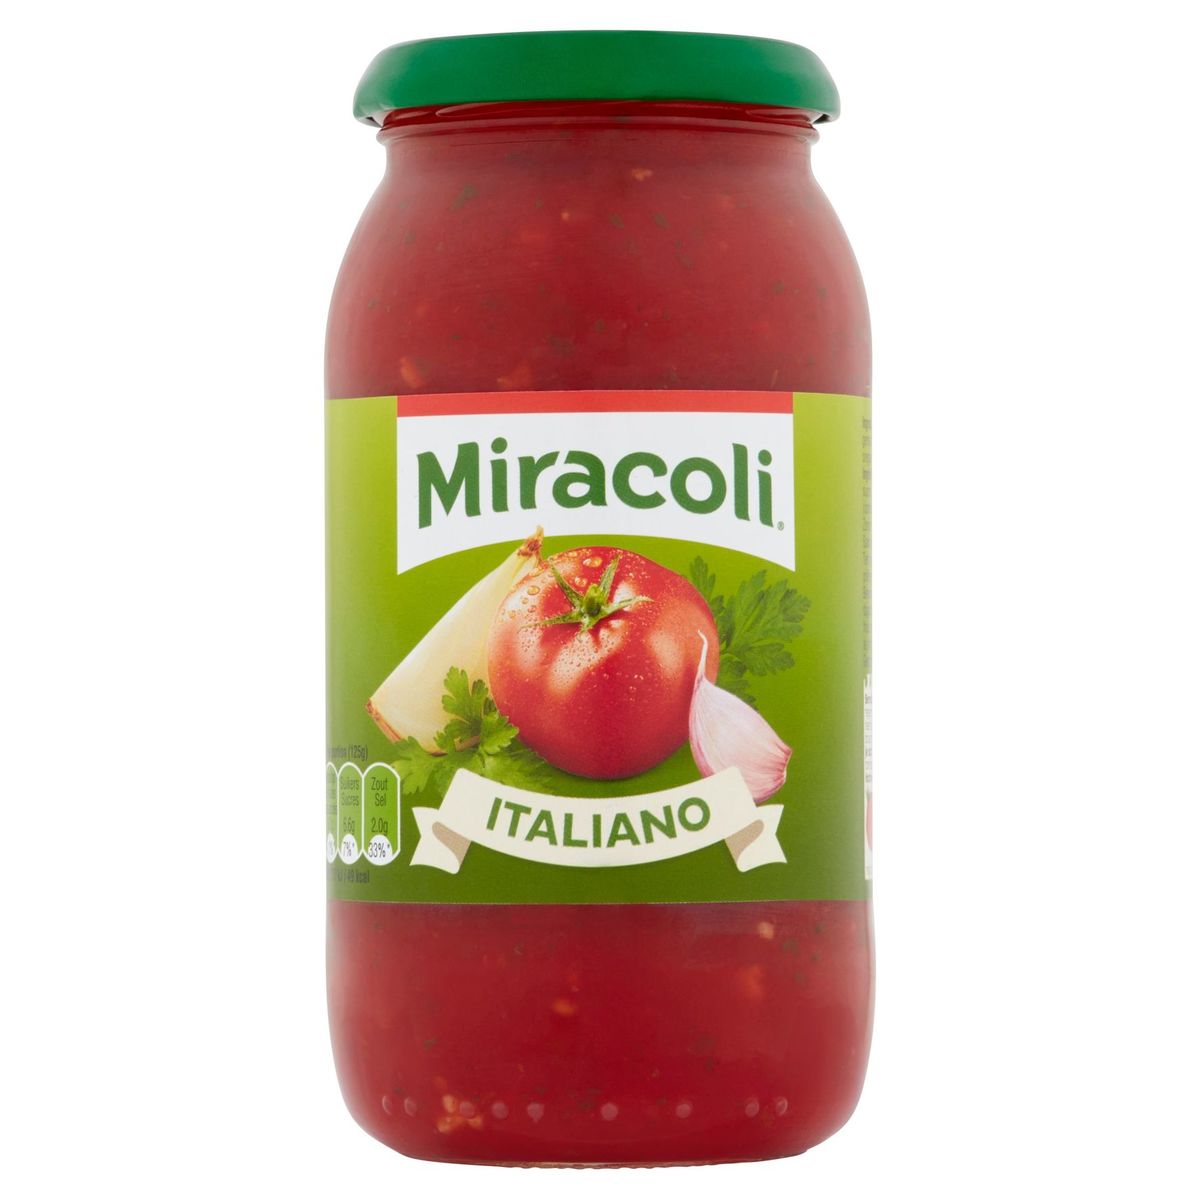 Miracoli Sauce Italiano 500 g